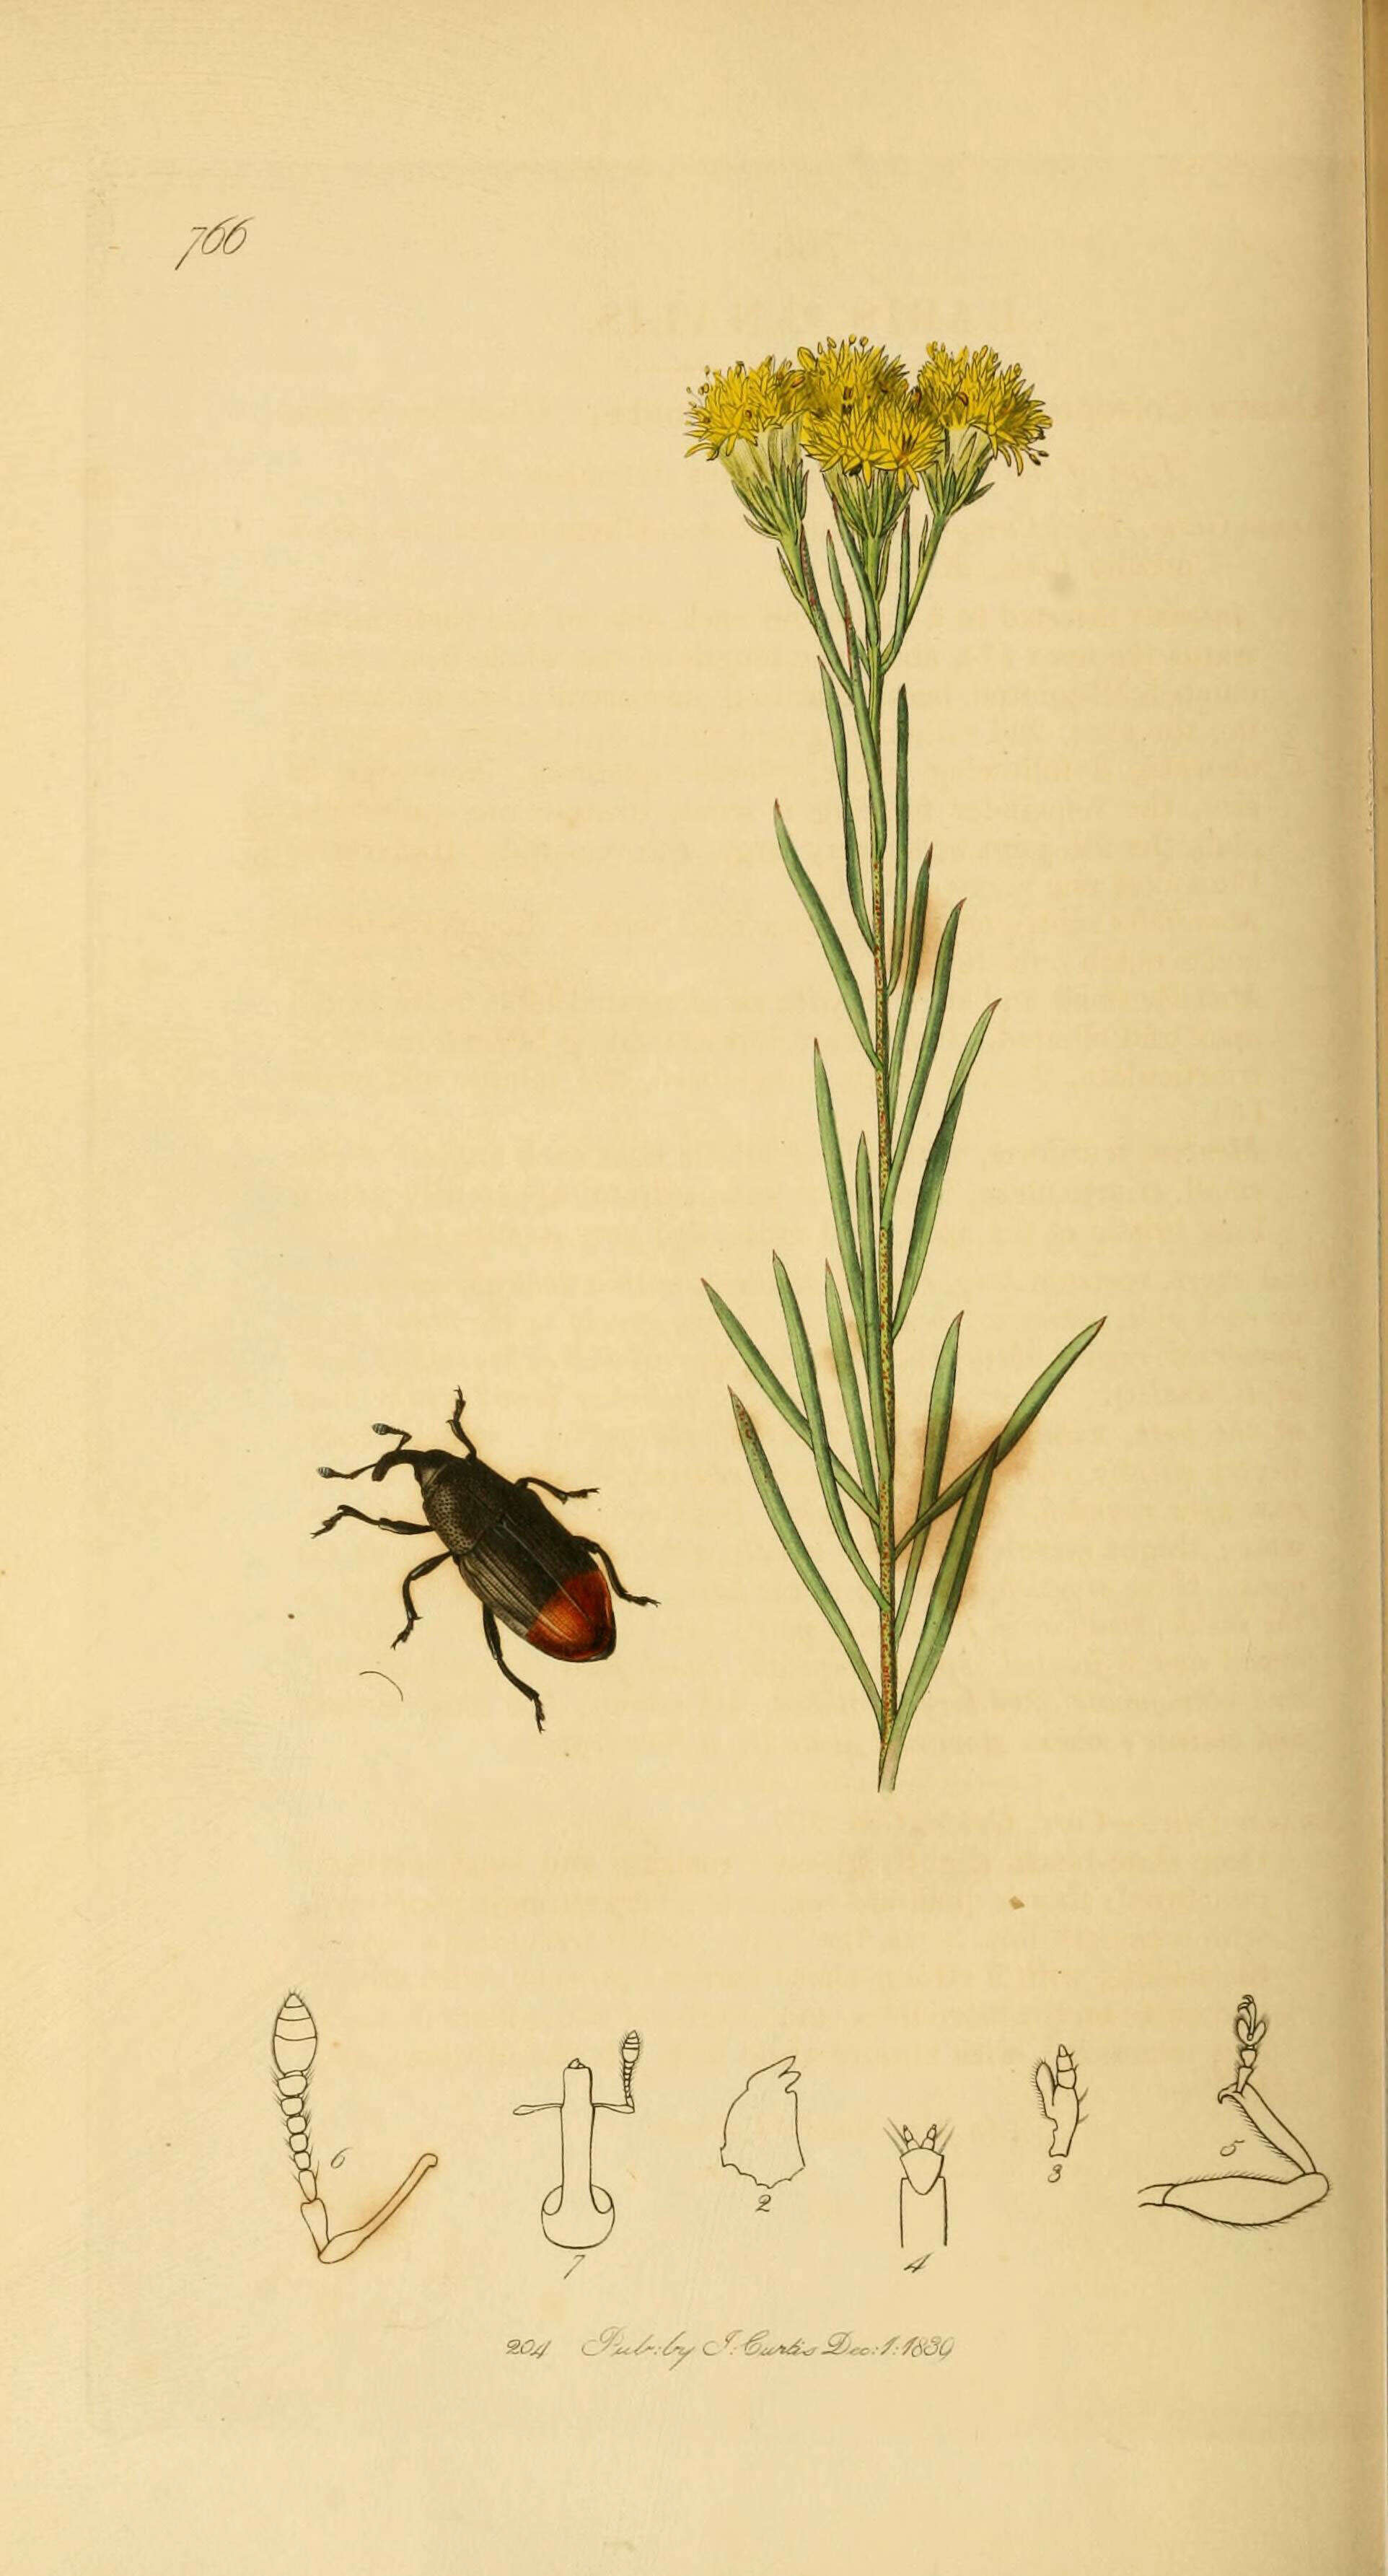 Sivun Baris analis (Olivier & A. G. 1791) kuva